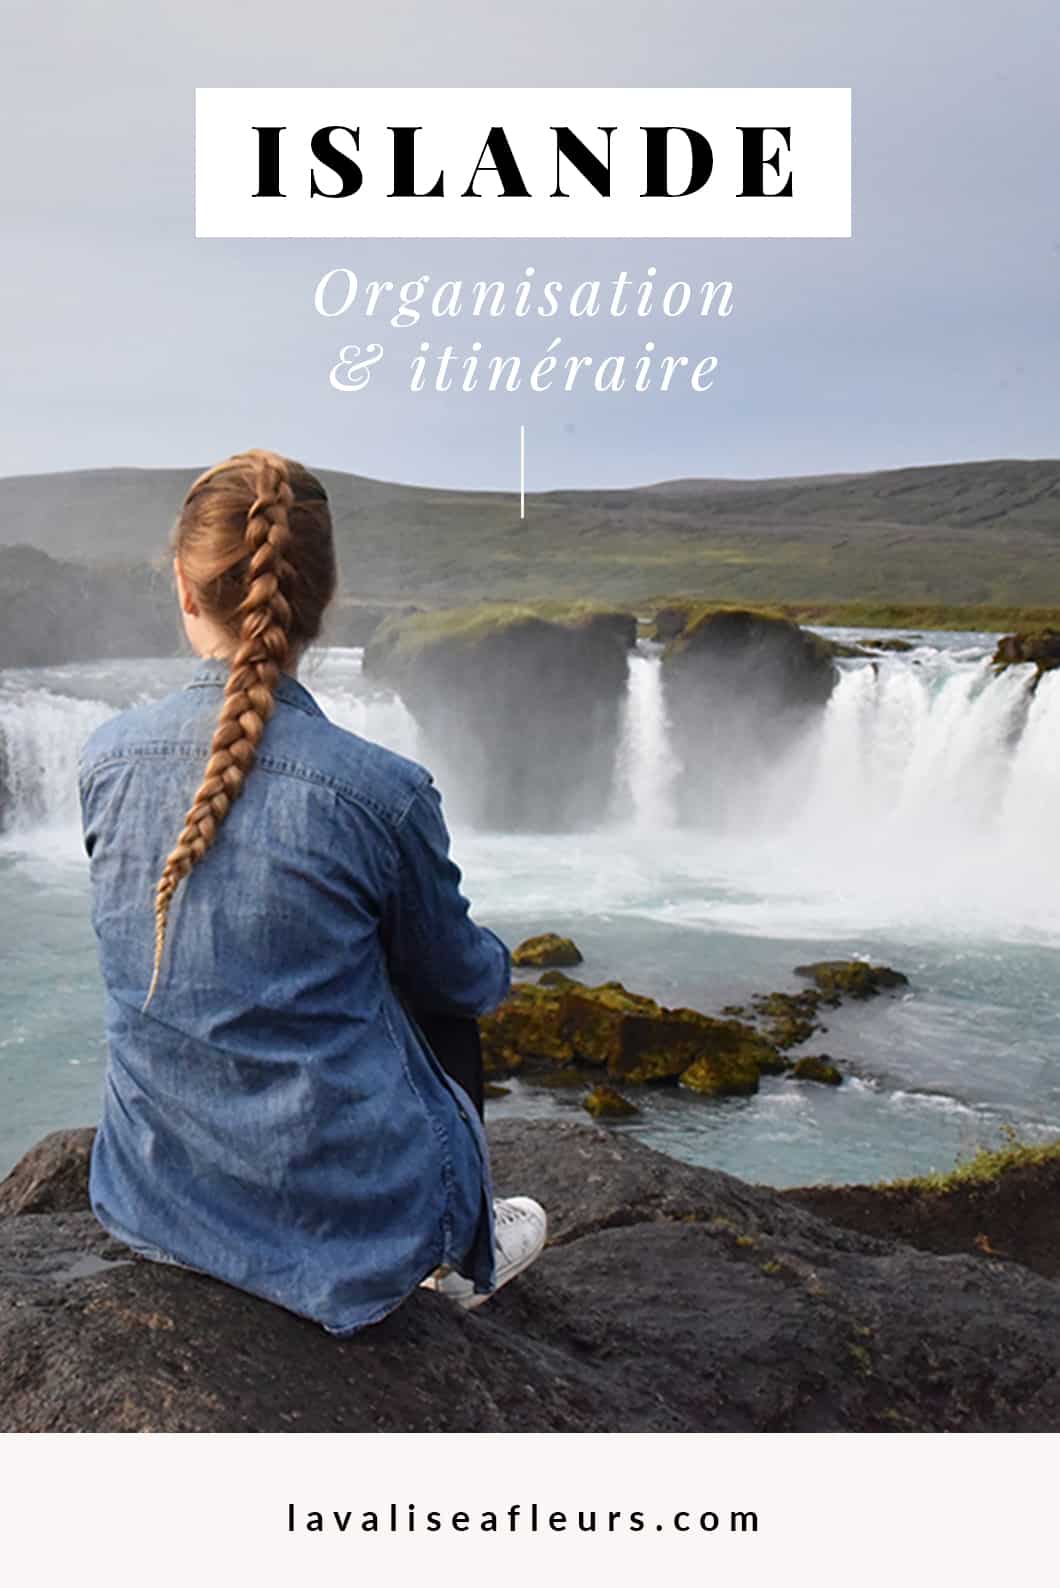 Organisation et itinéraire d'un voyage en Islande